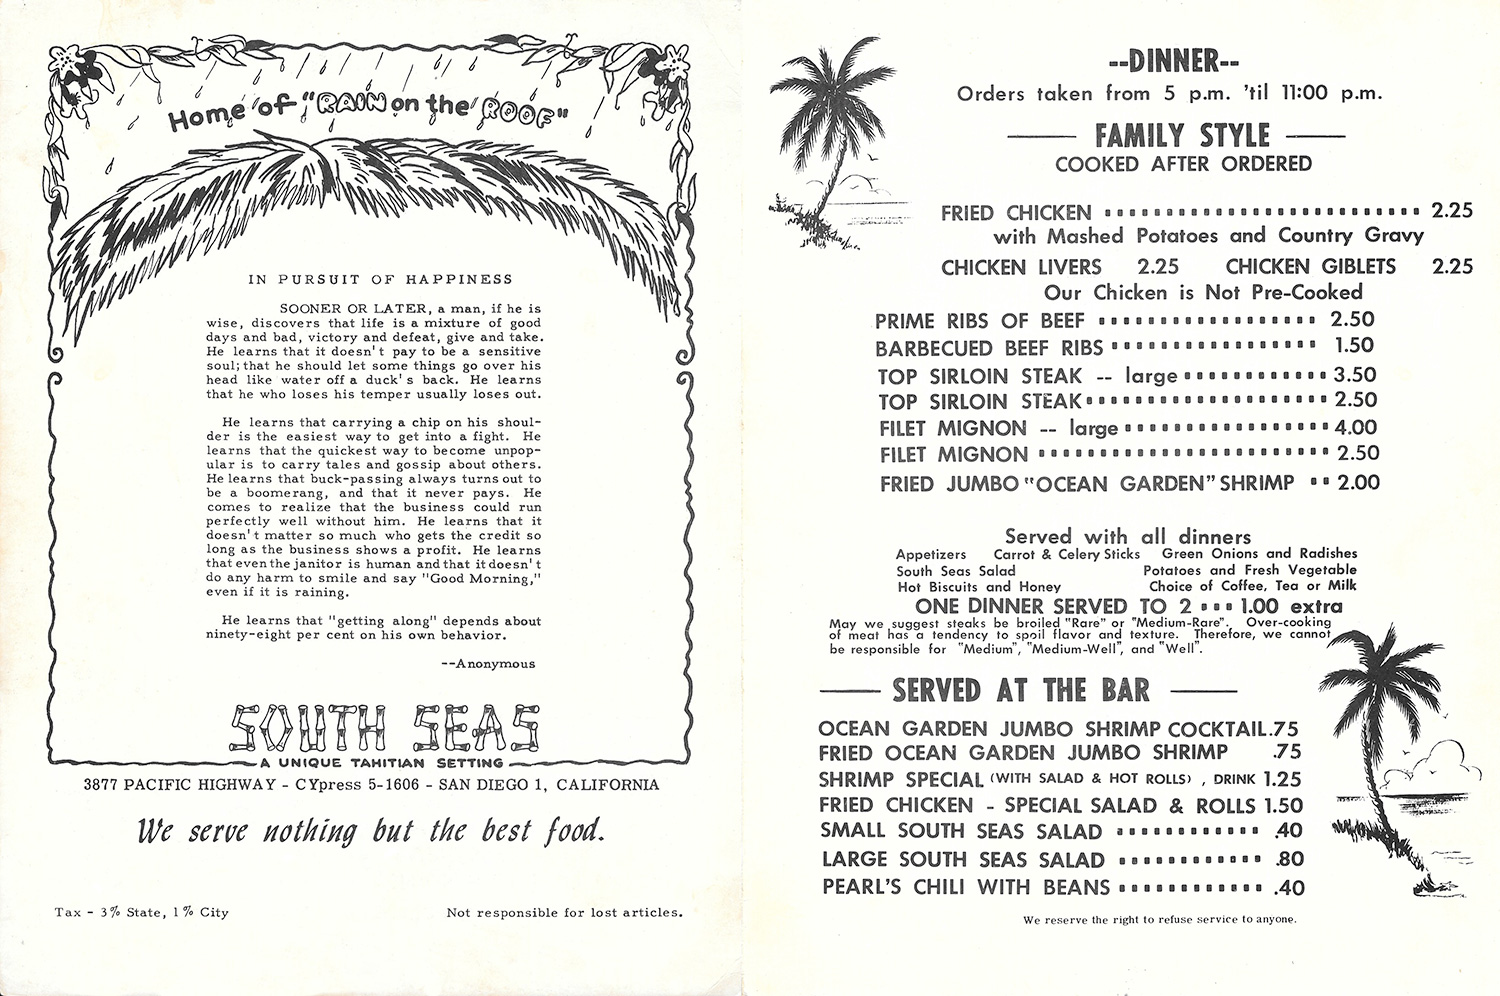 South Seas Cafe menu pages 2-3